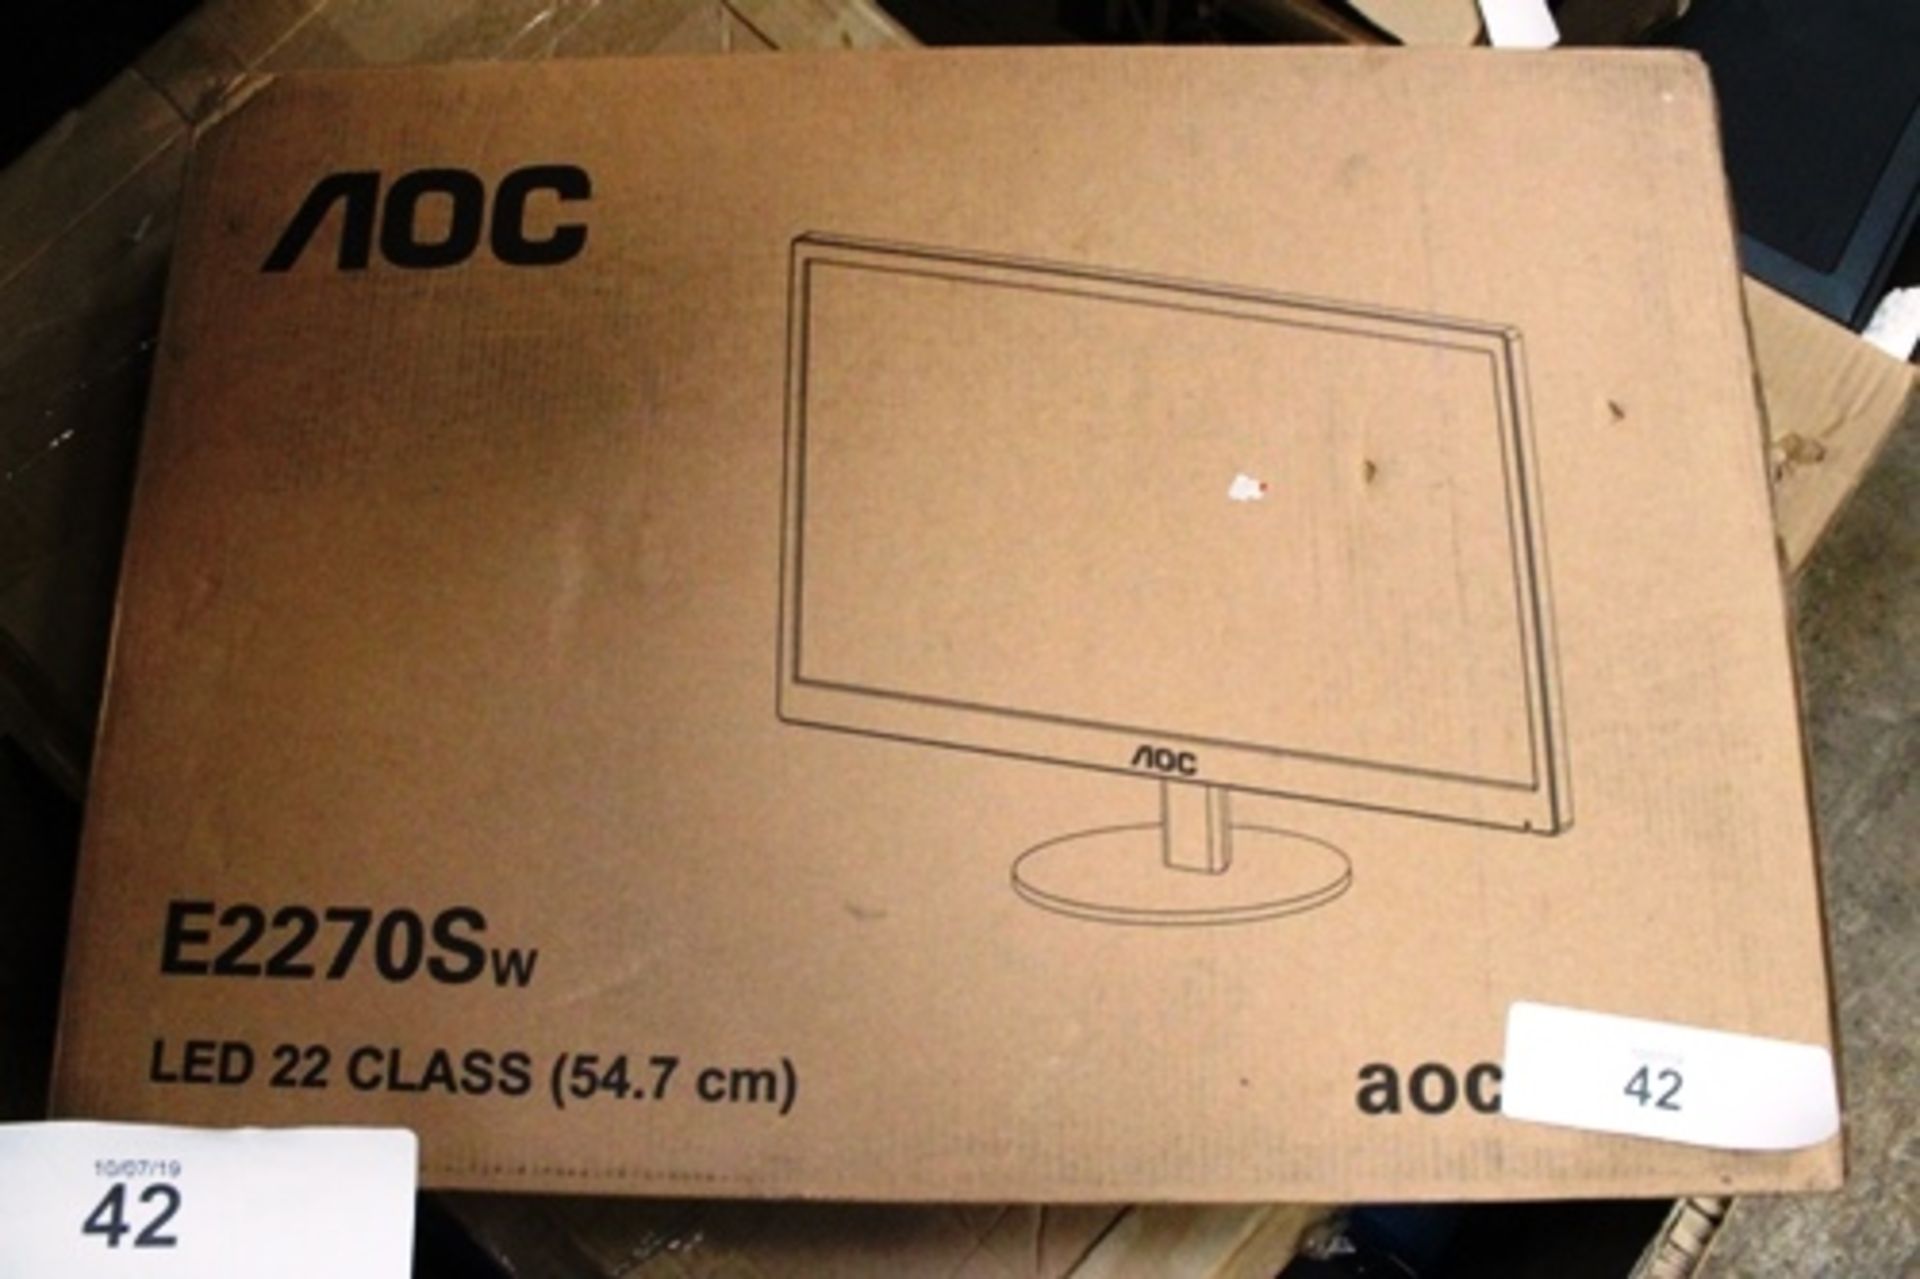 An AOC E2270 SWN computer monitor - New in box (esb5)